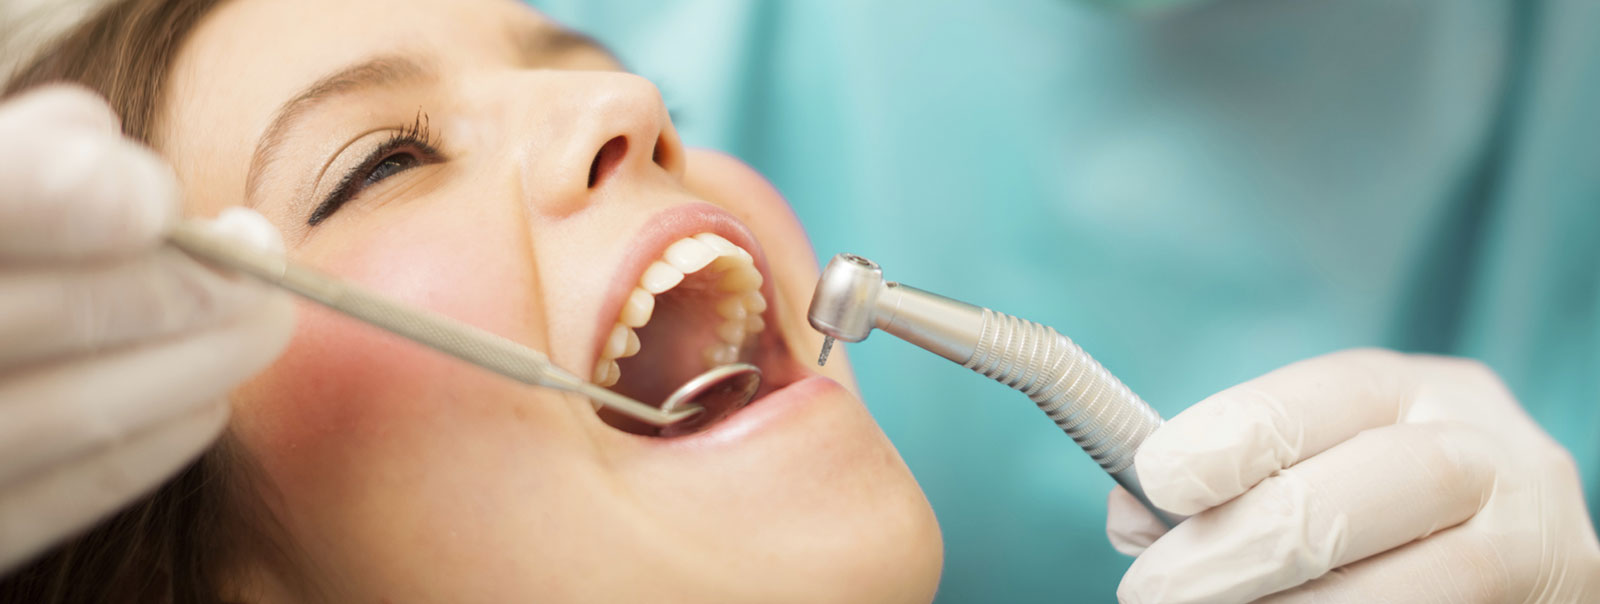 Clínica Dental Dr. Balcells